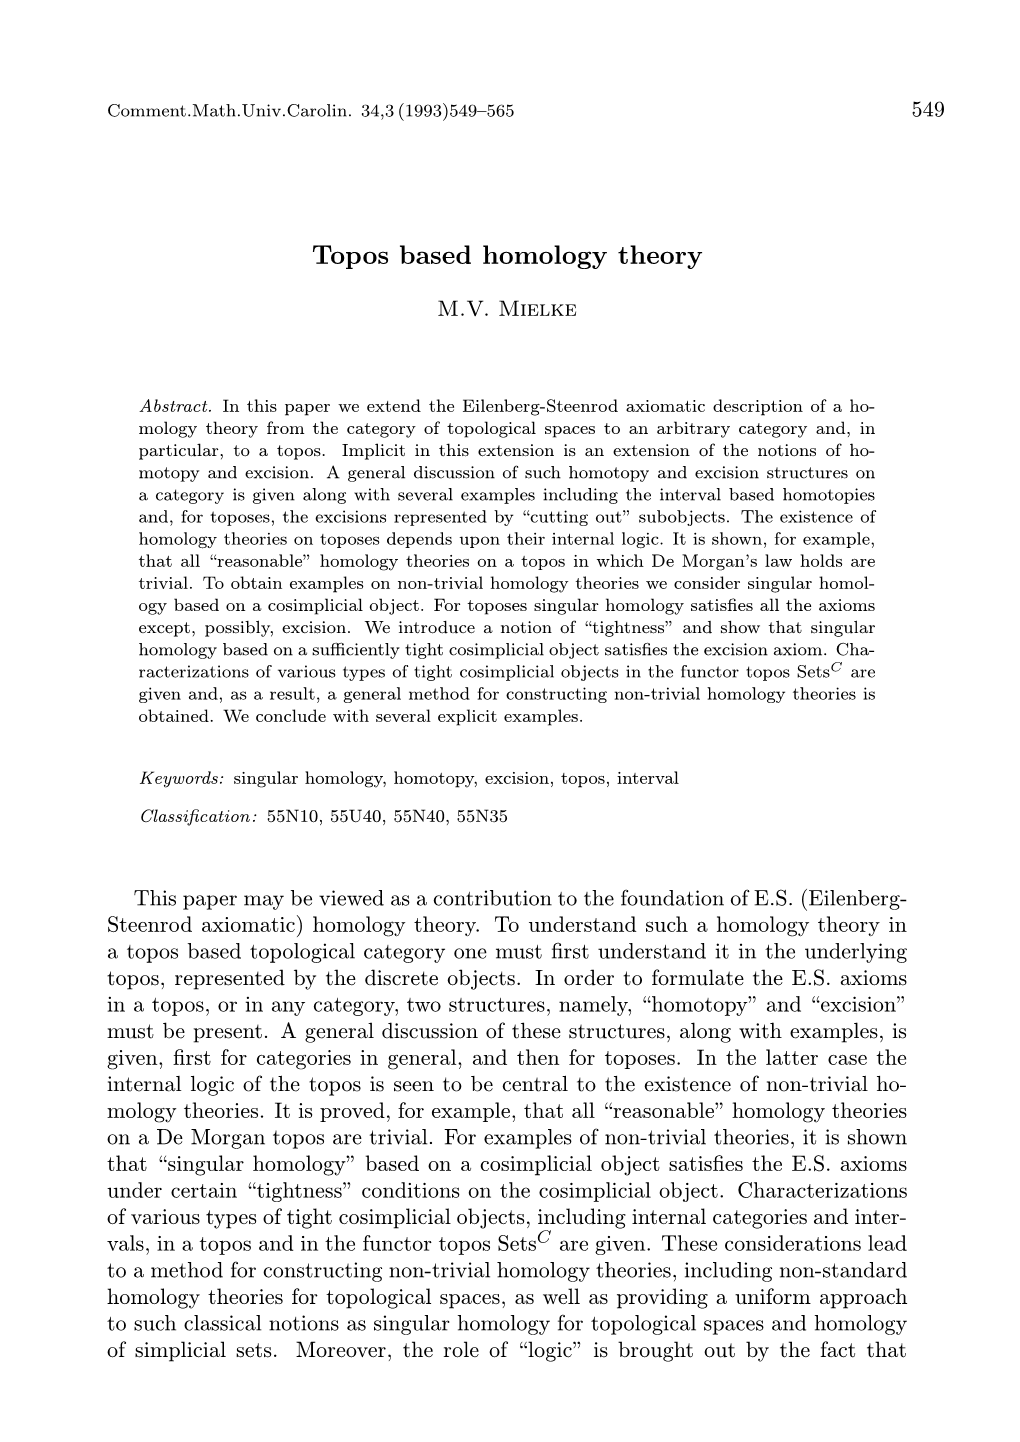 Topos Based Homology Theory